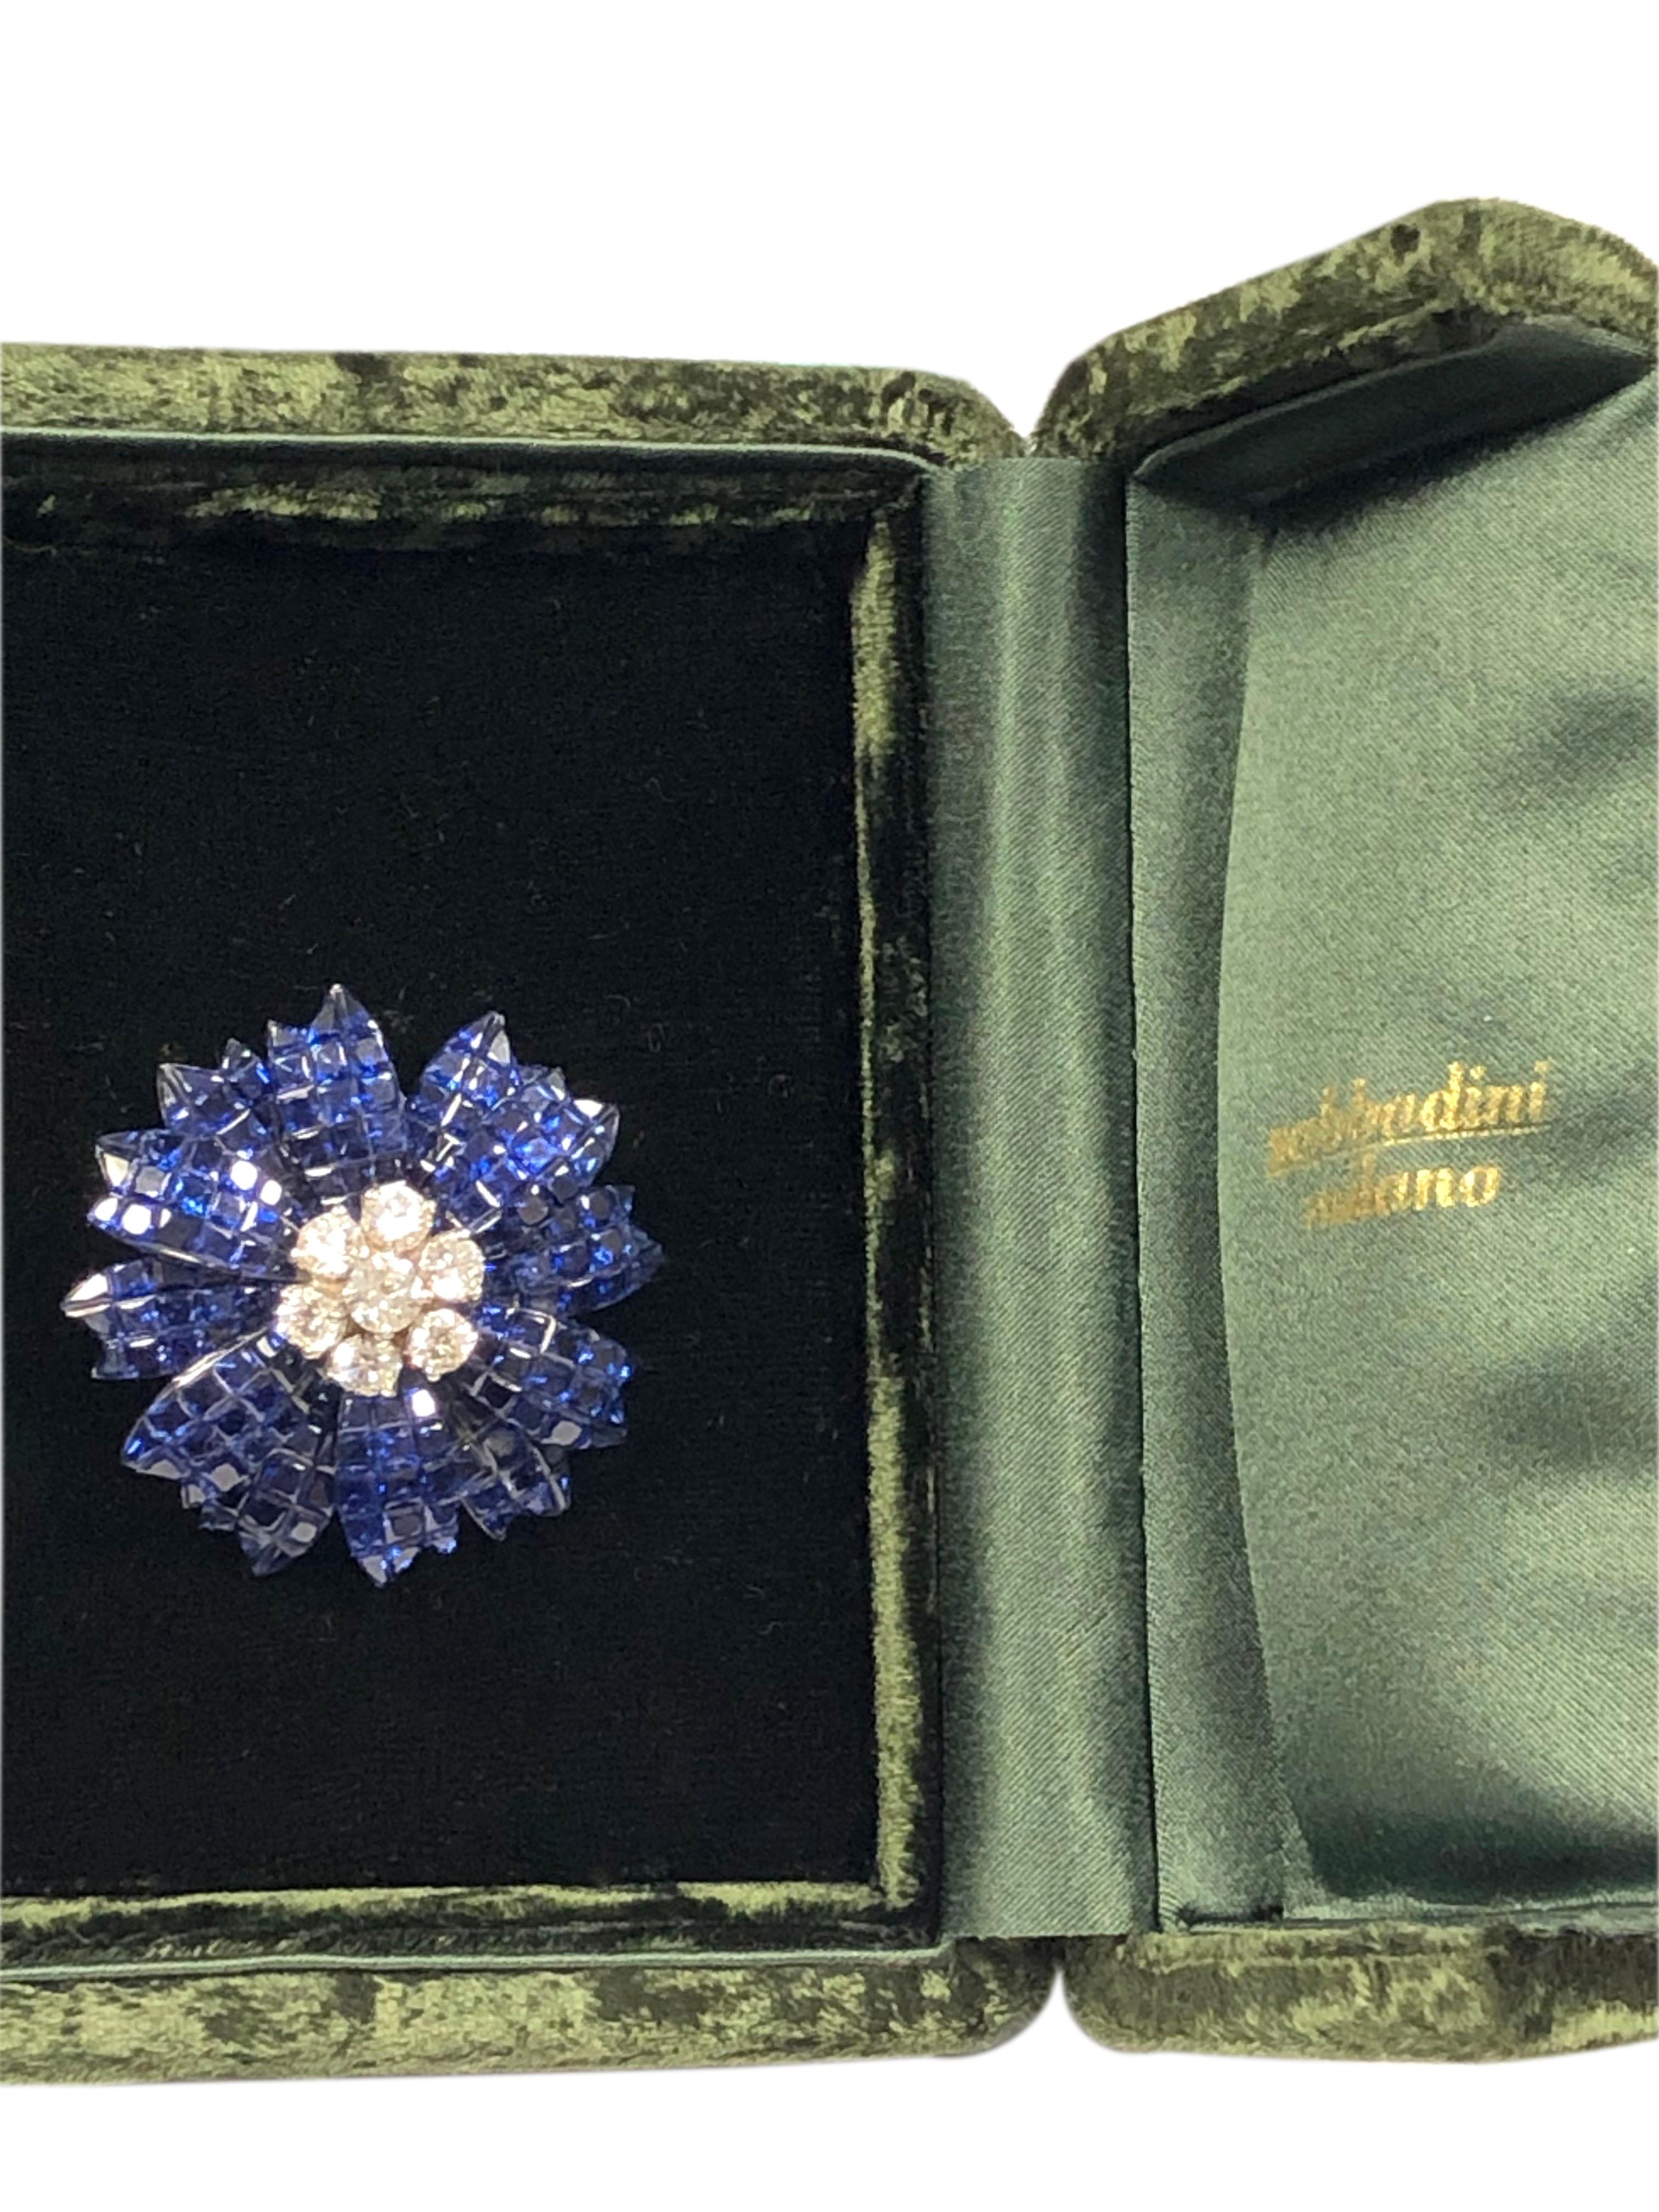 Sabbadini Invisible Set Gold Sapphire and Diamond Flower Brooch 2